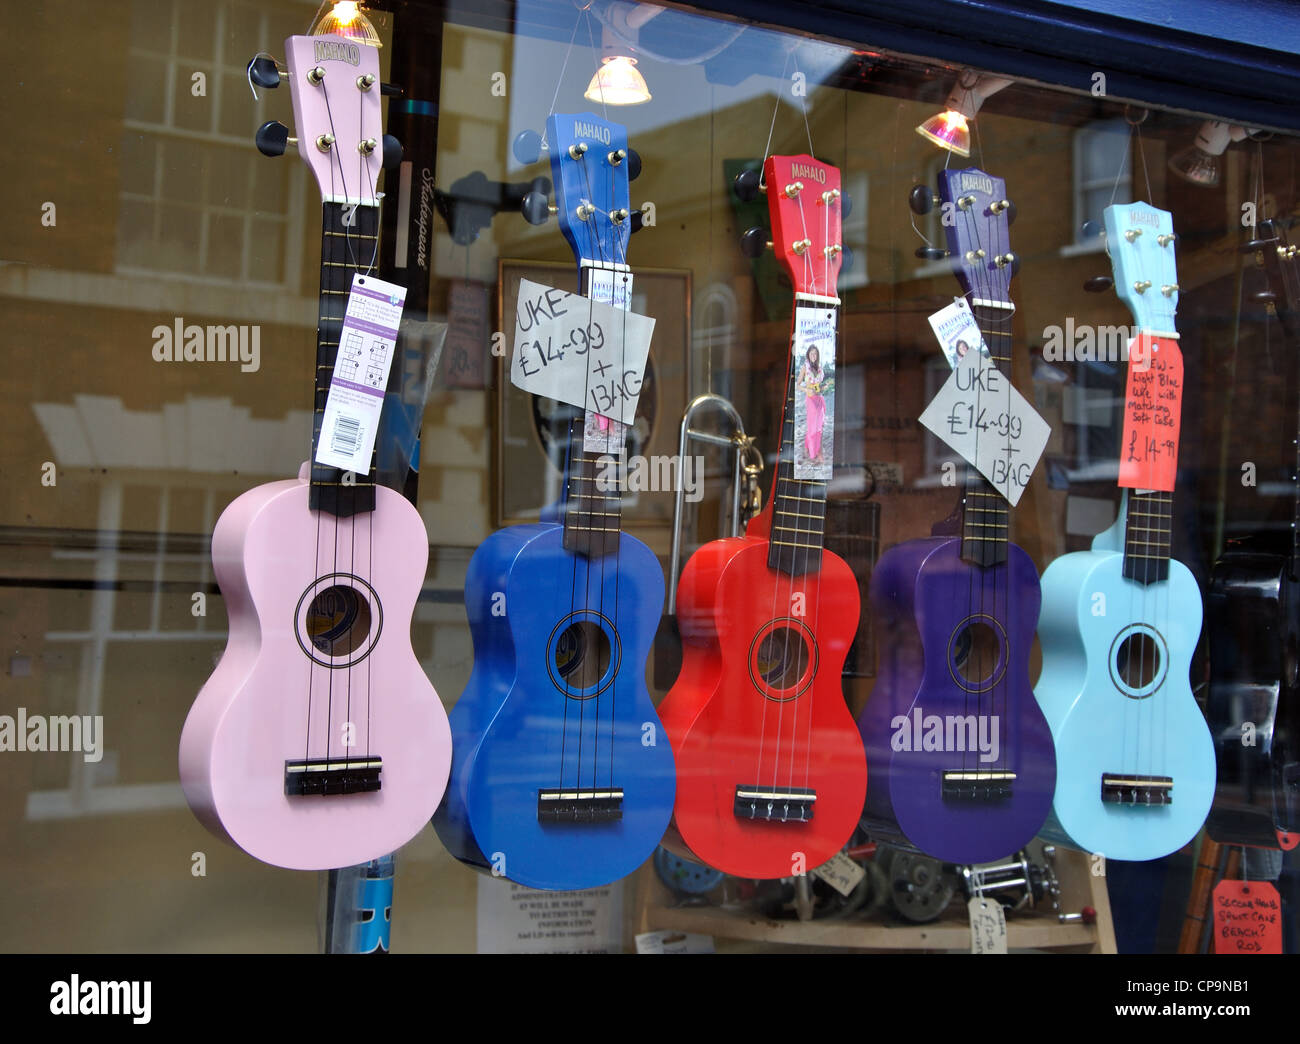 guitars for sale in shop window, York, England, UK Stock Photo